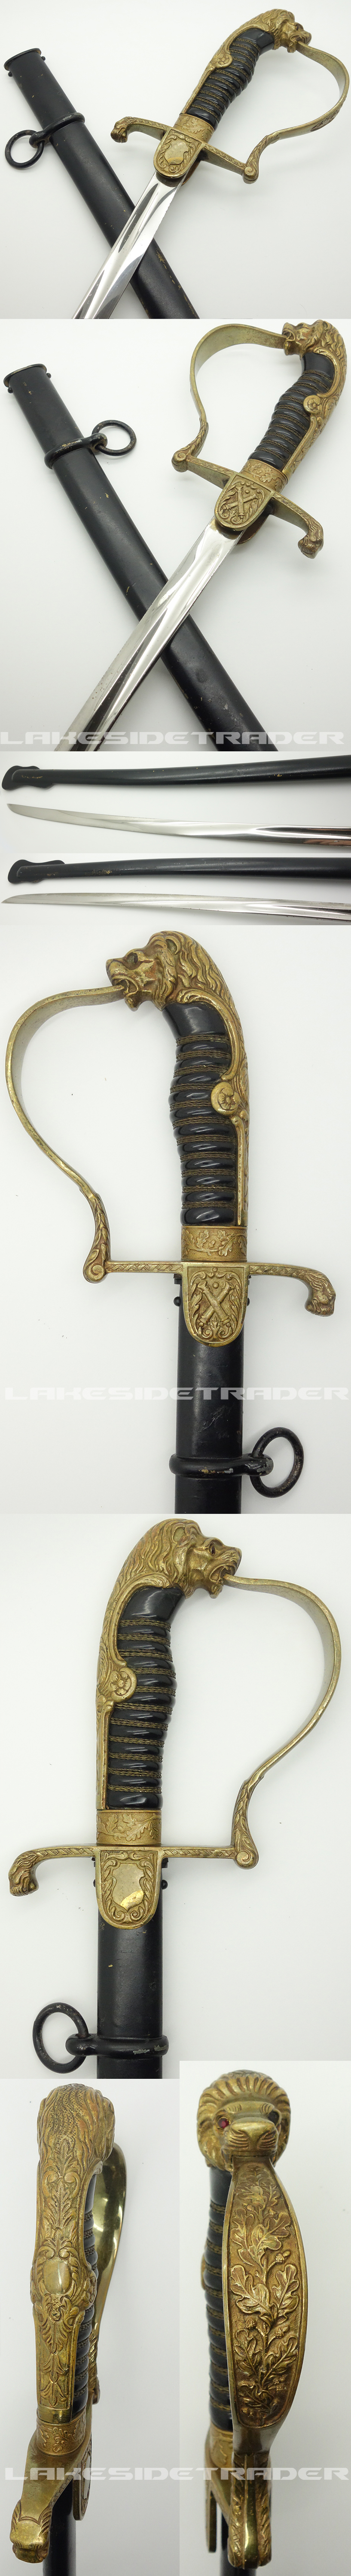 Army Officers Lion-head Sword by Eickhorn